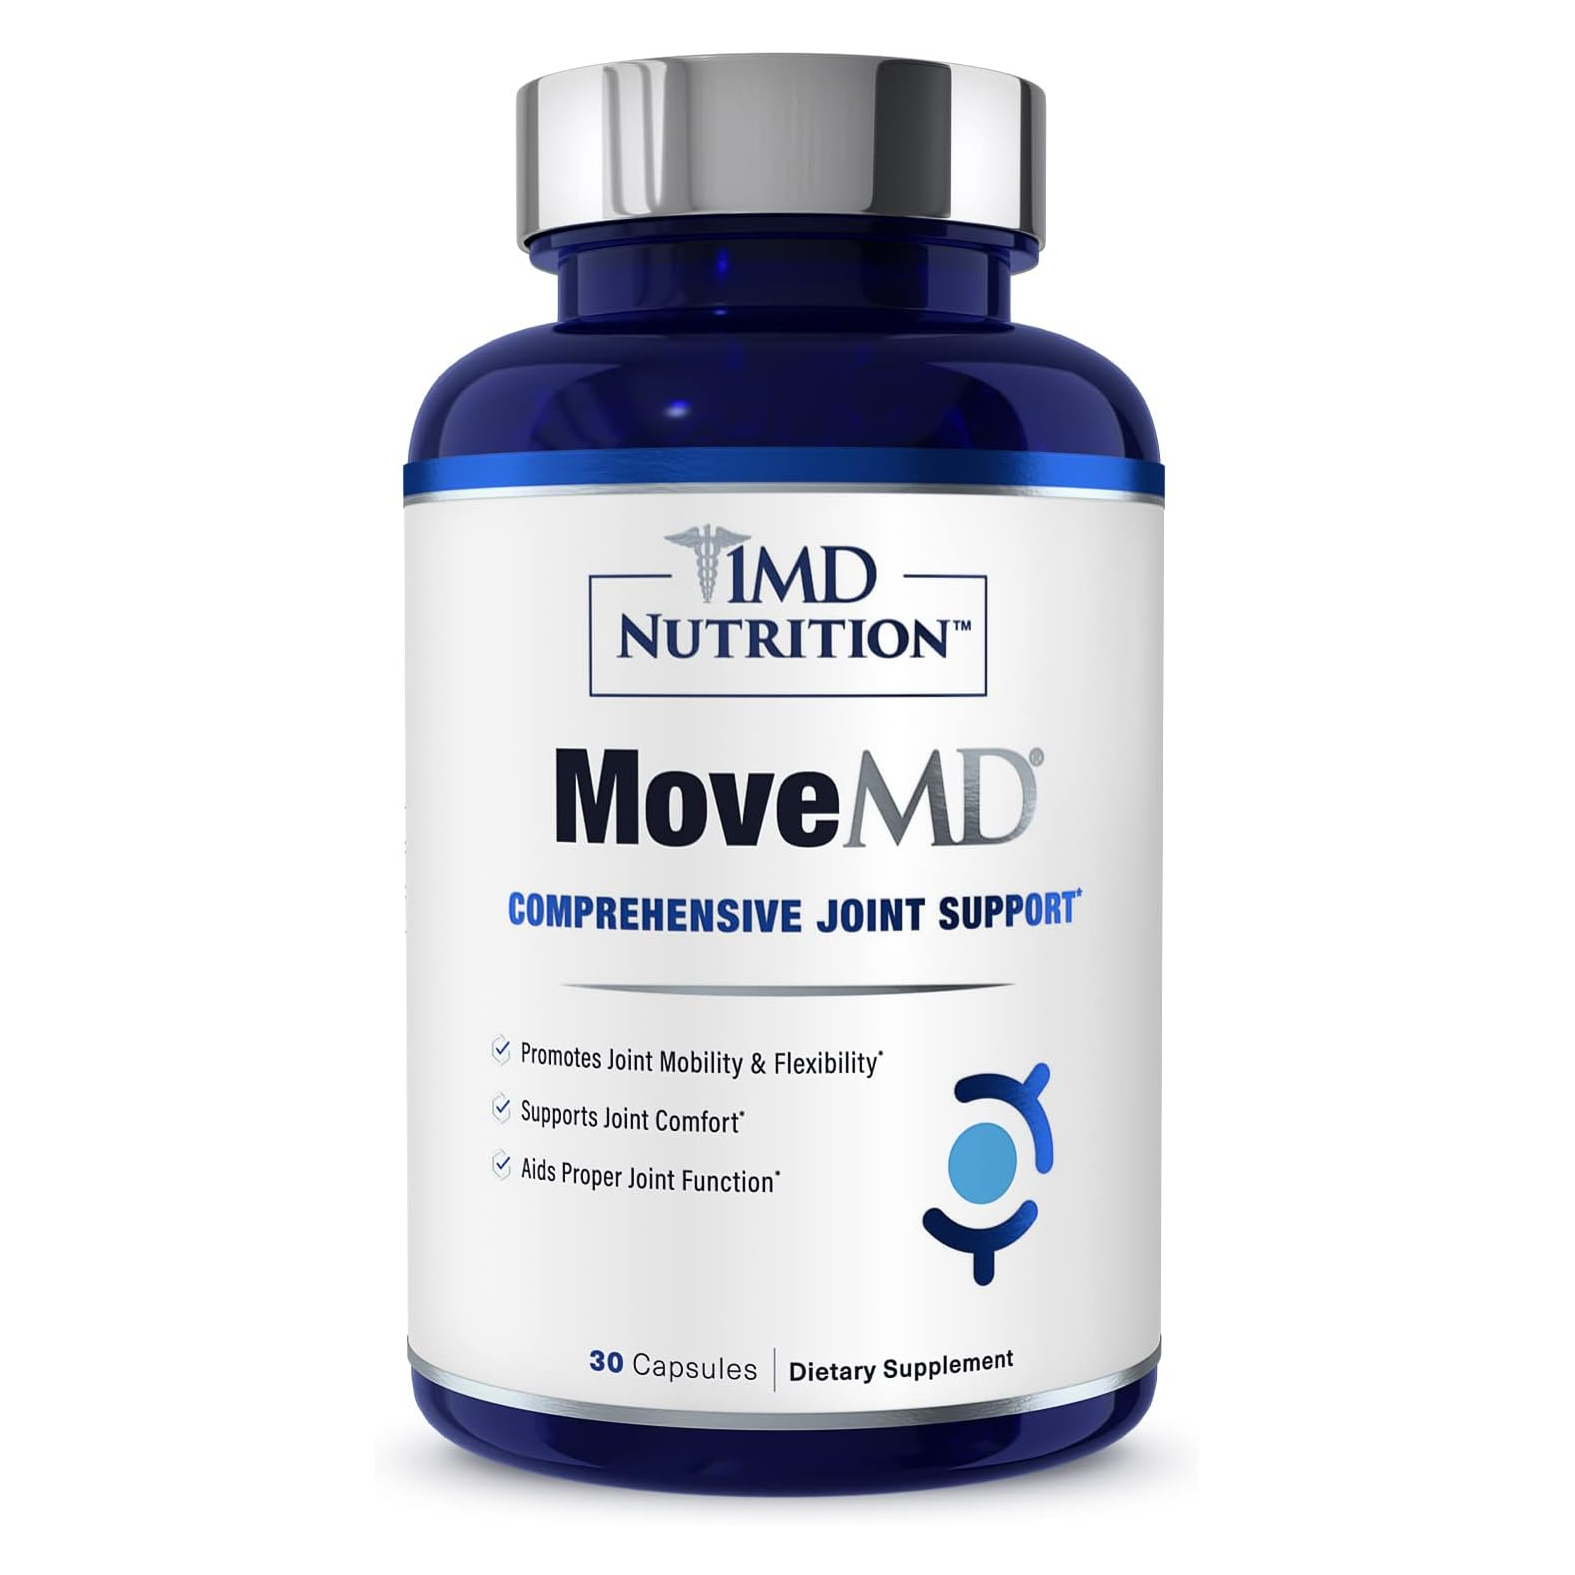 Коллаген 1MD Nutrition MoveMD Comprehensive Joint Support, 30 капсул биологически активная добавка для здоровья суставов геладринк форте люкс 14 шт